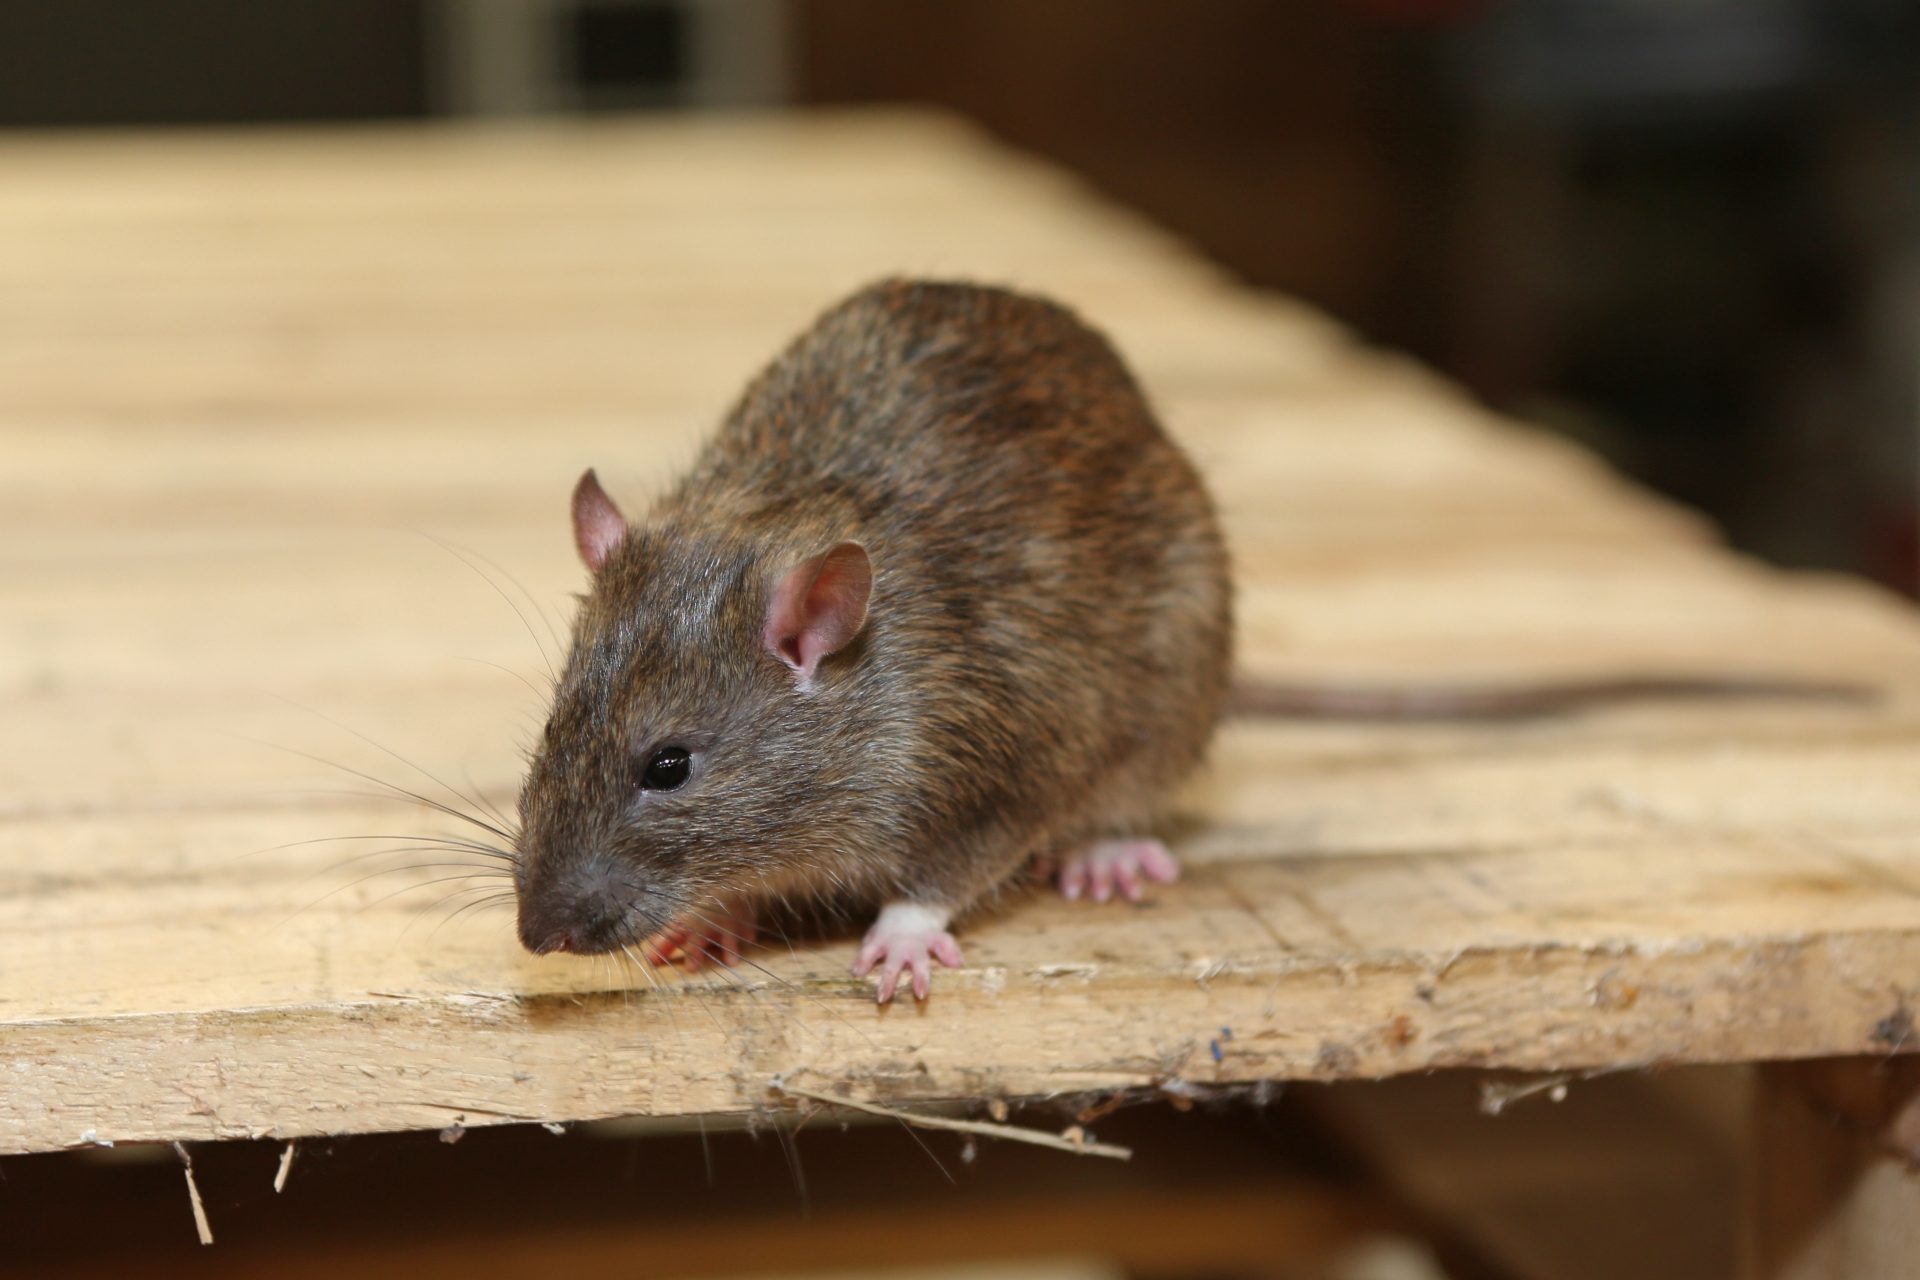 Rat extermination, Pest Control in Stanmore, Queensbury, HA7. Call Now 020 8166 9746